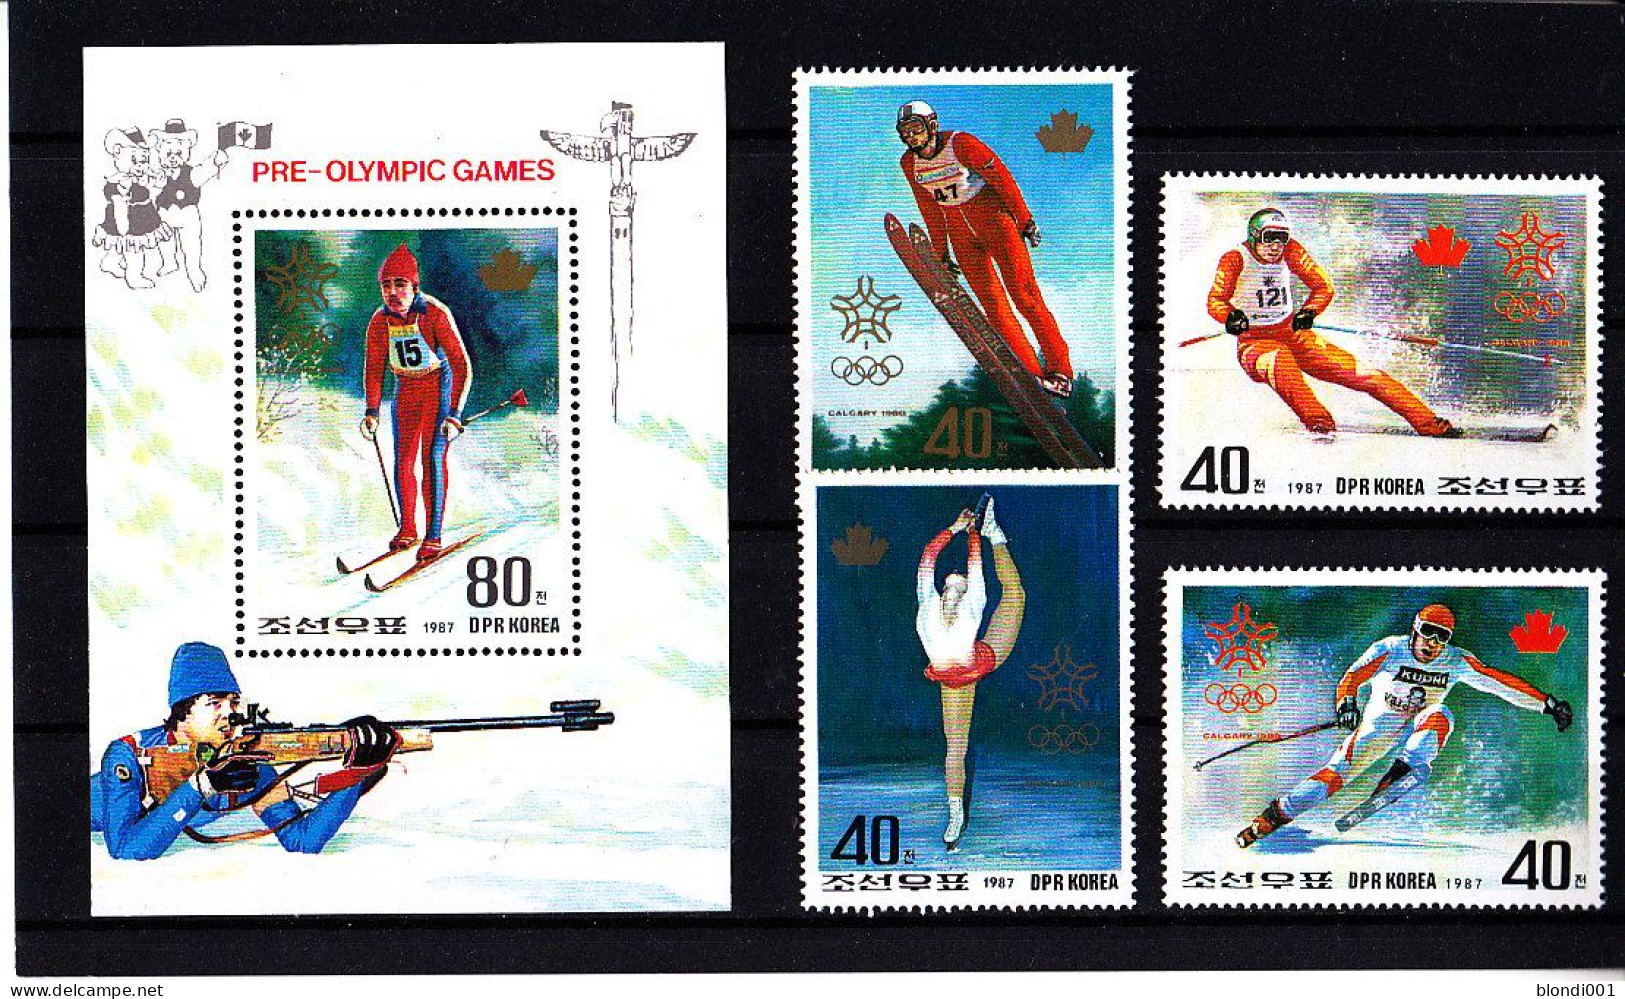 Olympics 1988 - Figure Skate - KOREA - S/S+Set MNH - Winter 1988: Calgary